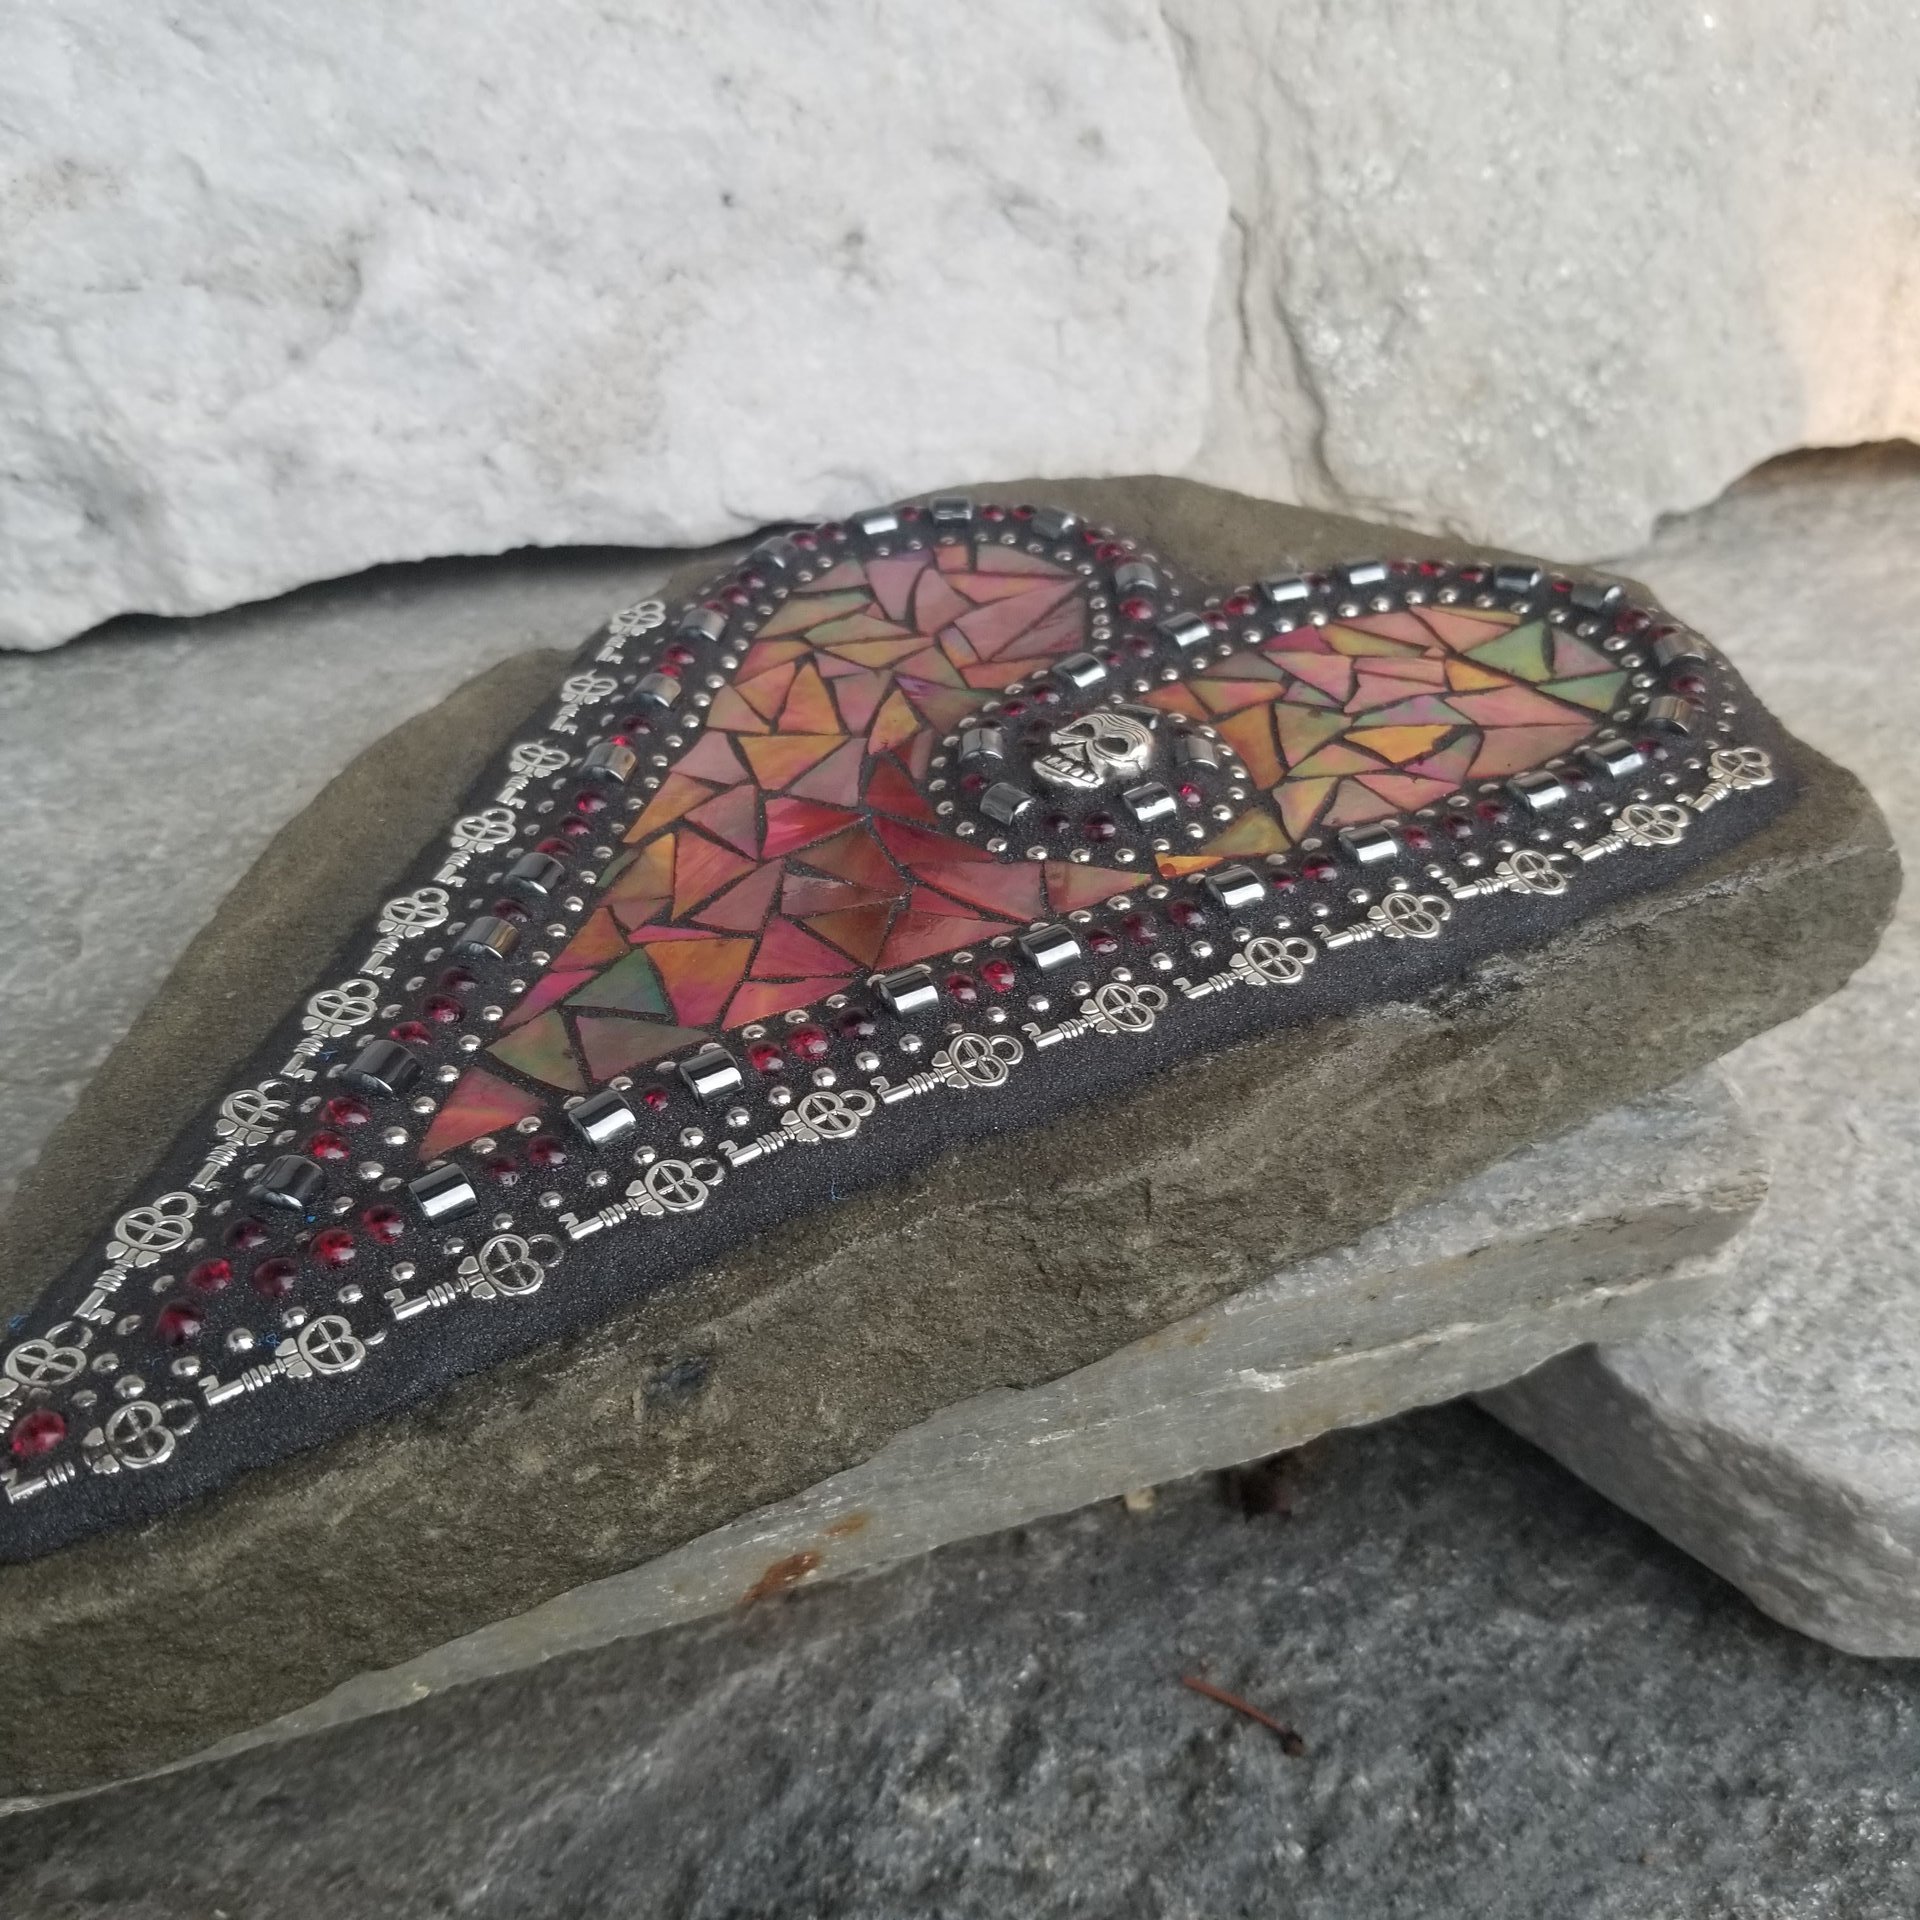 Red Heart Skull Mosaic Garden Stone